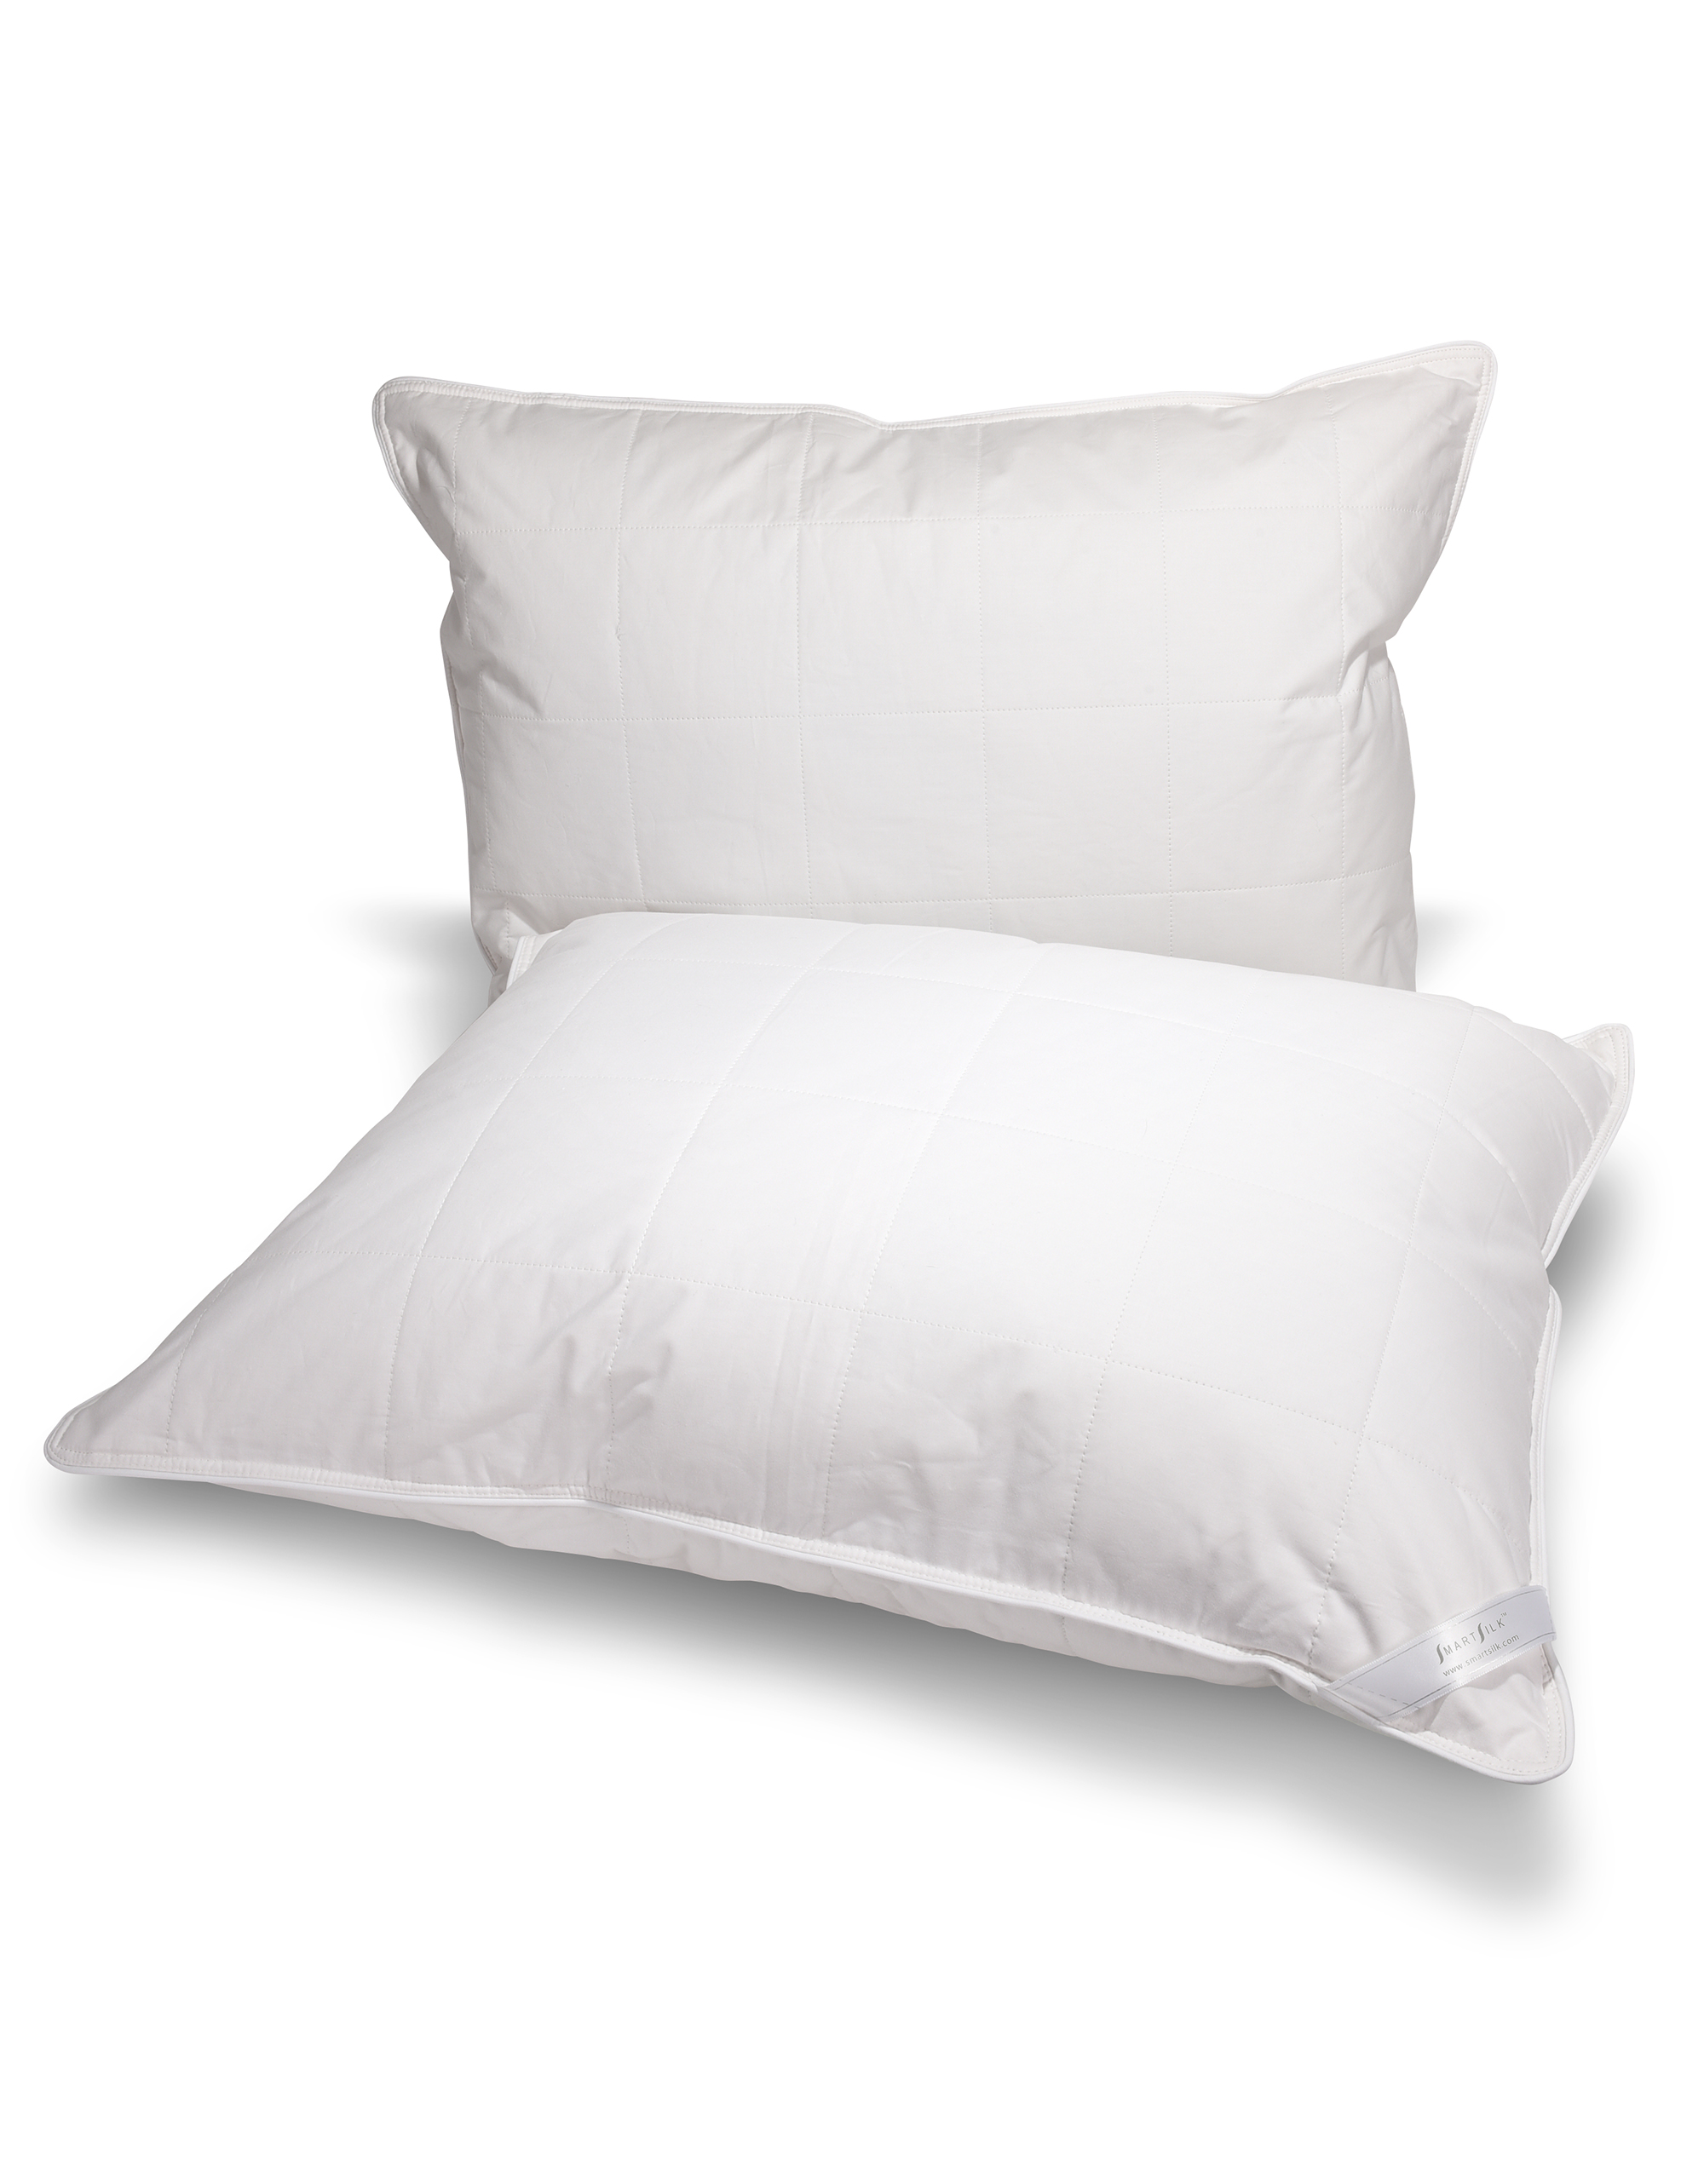 64123-l3 Pillow Comfort Level 3 - Queen